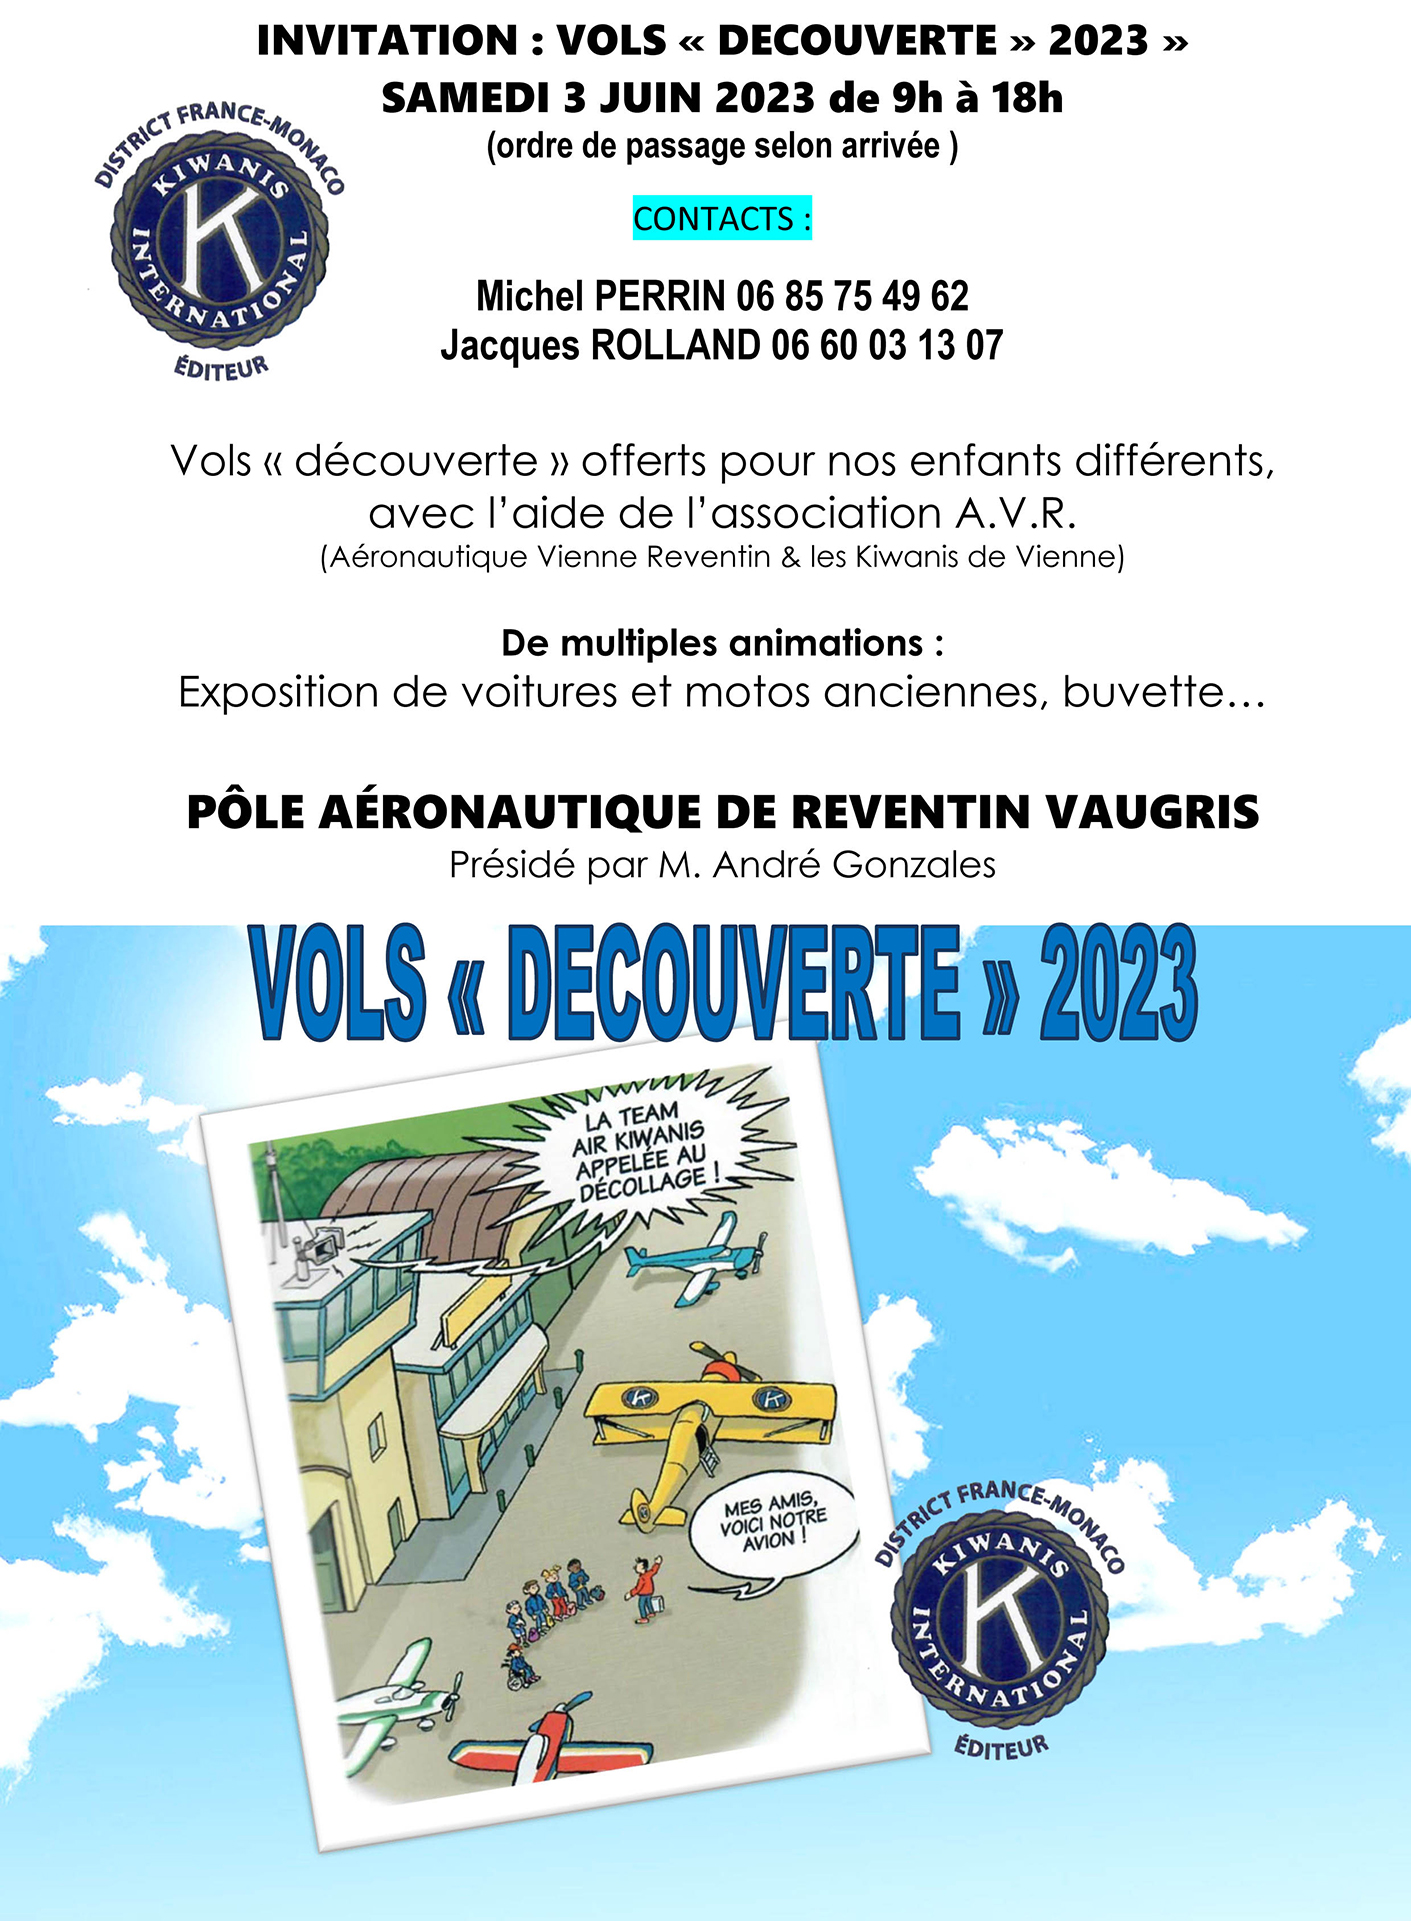 KIWANIS_Vols_découverte_3 Juin 2023_invitation-Pole Aeronautique AVR